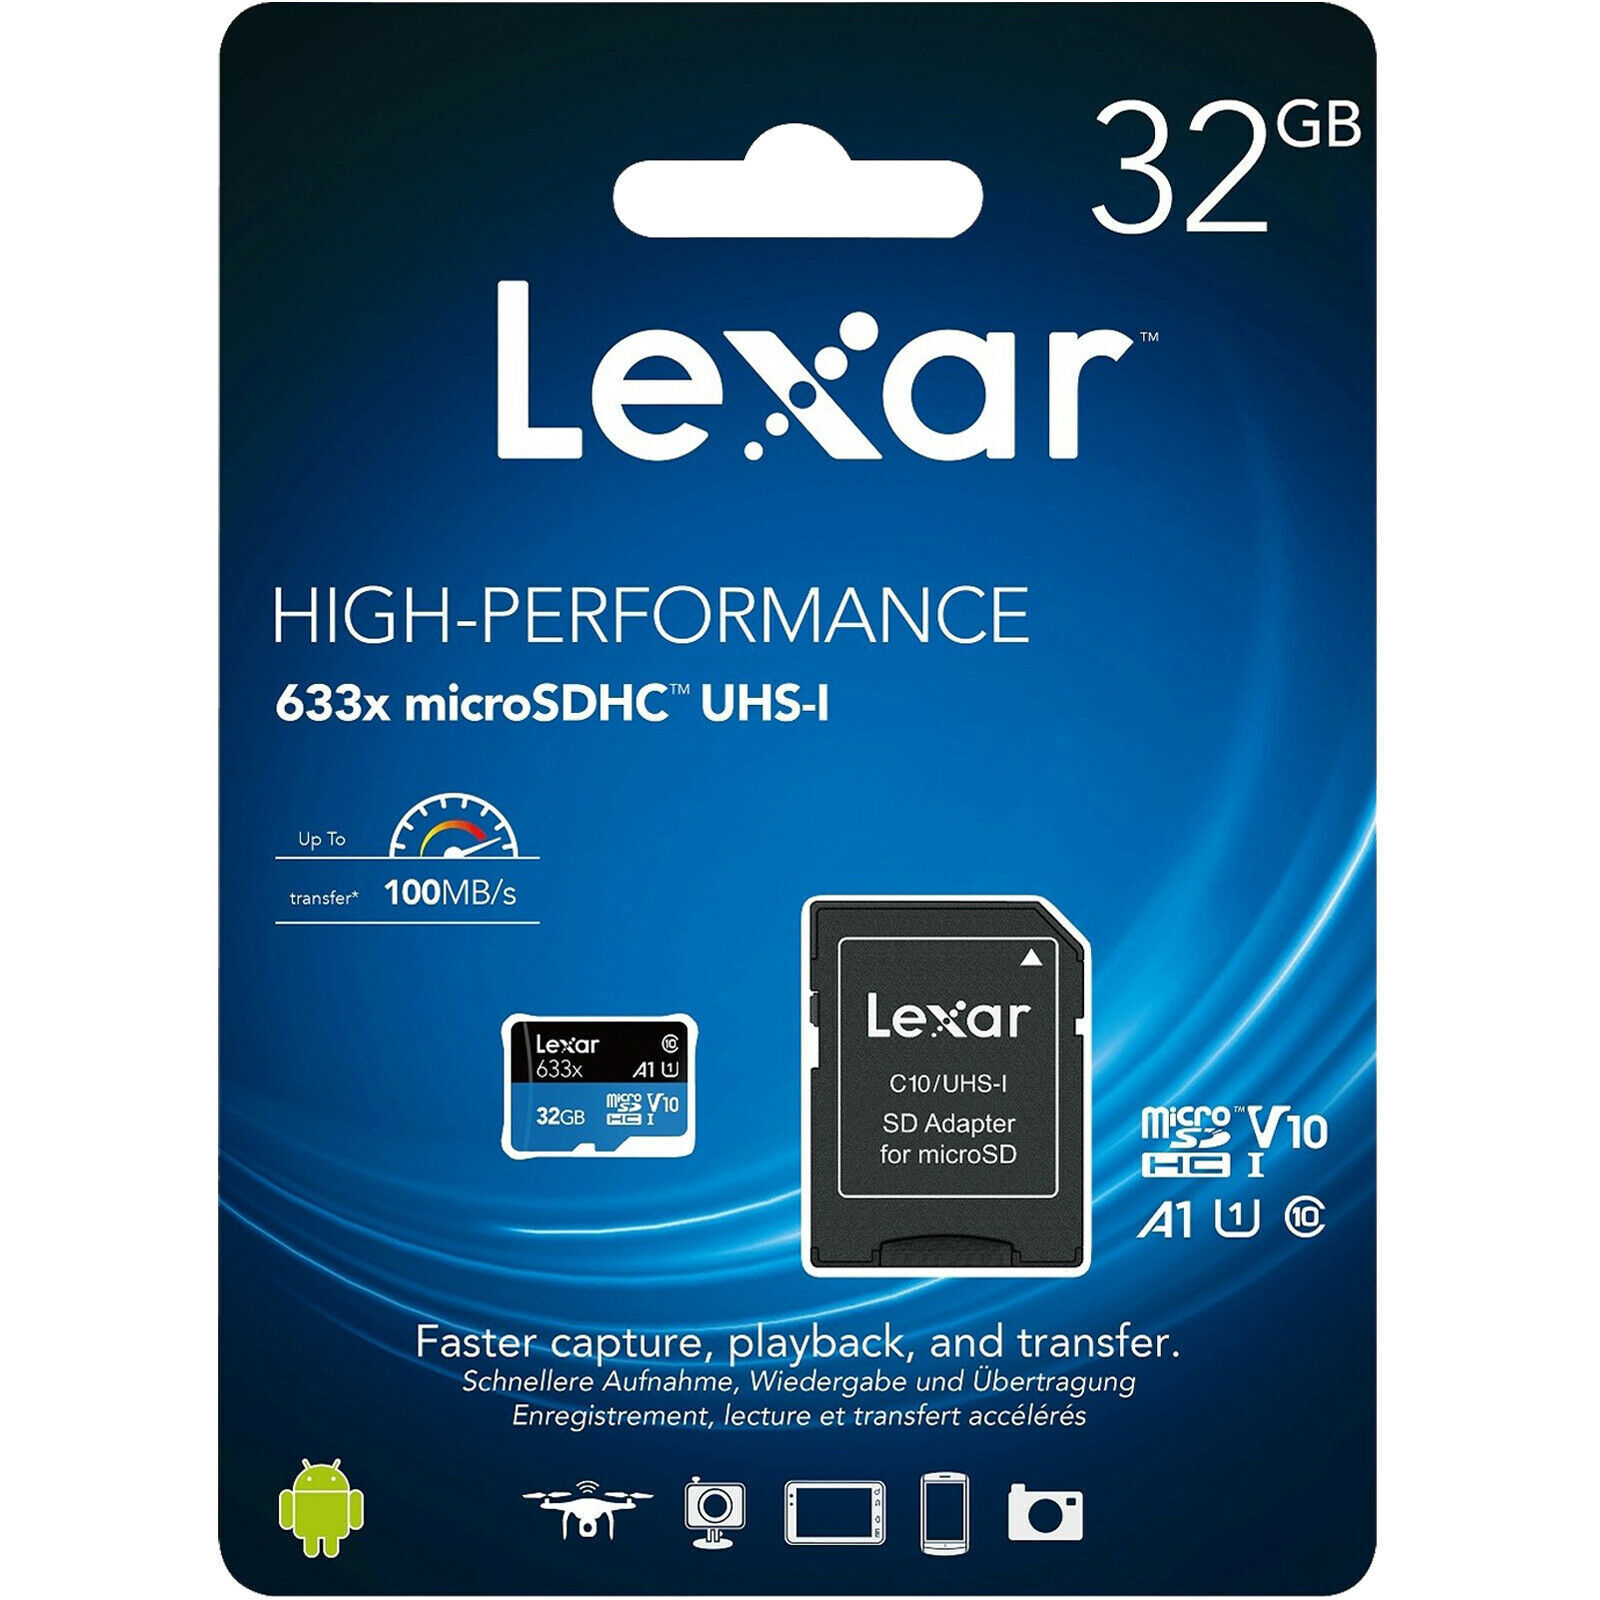 Lexar 32GB Micro SD Card SDHC UHS-I High Performance 633x 100MB/s U1 4K  Mobile